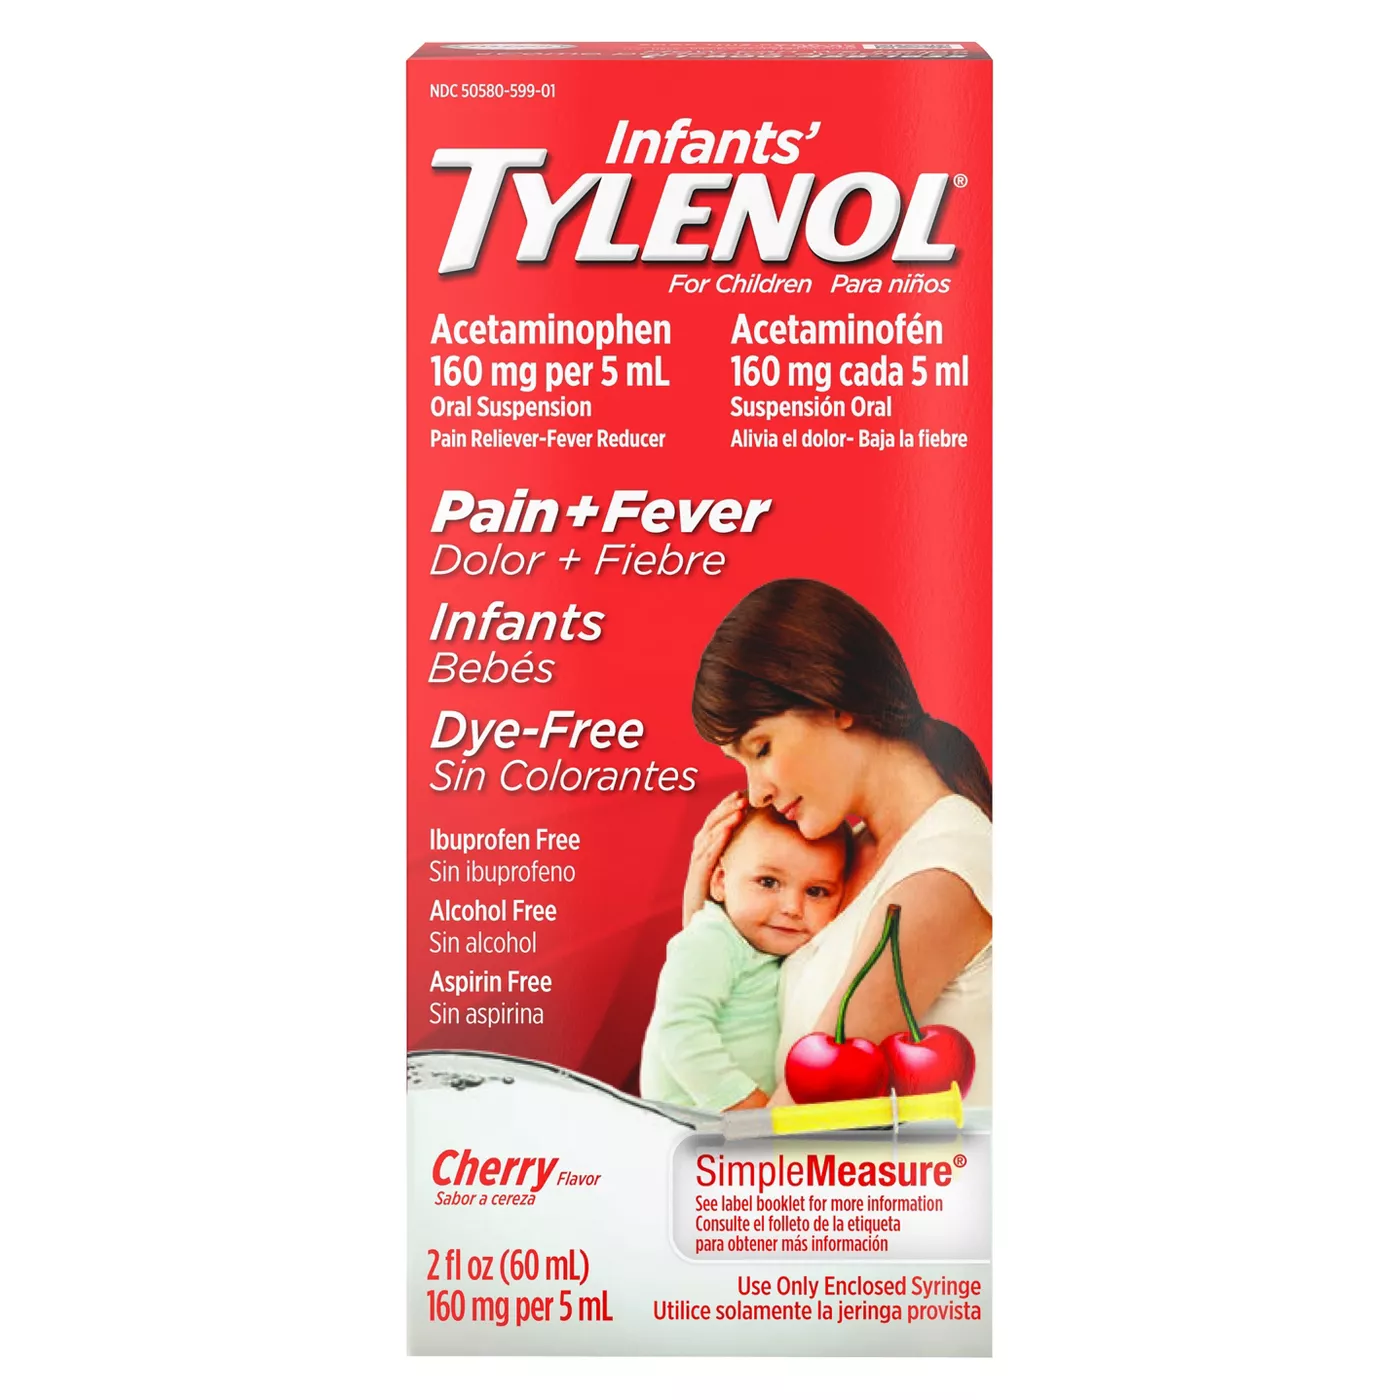 Infants' Tylenol Pain & Fever Reducer Liquid - Acetaminophen - Dye-Free Cherry - 2 fl oz - image 1 of 9